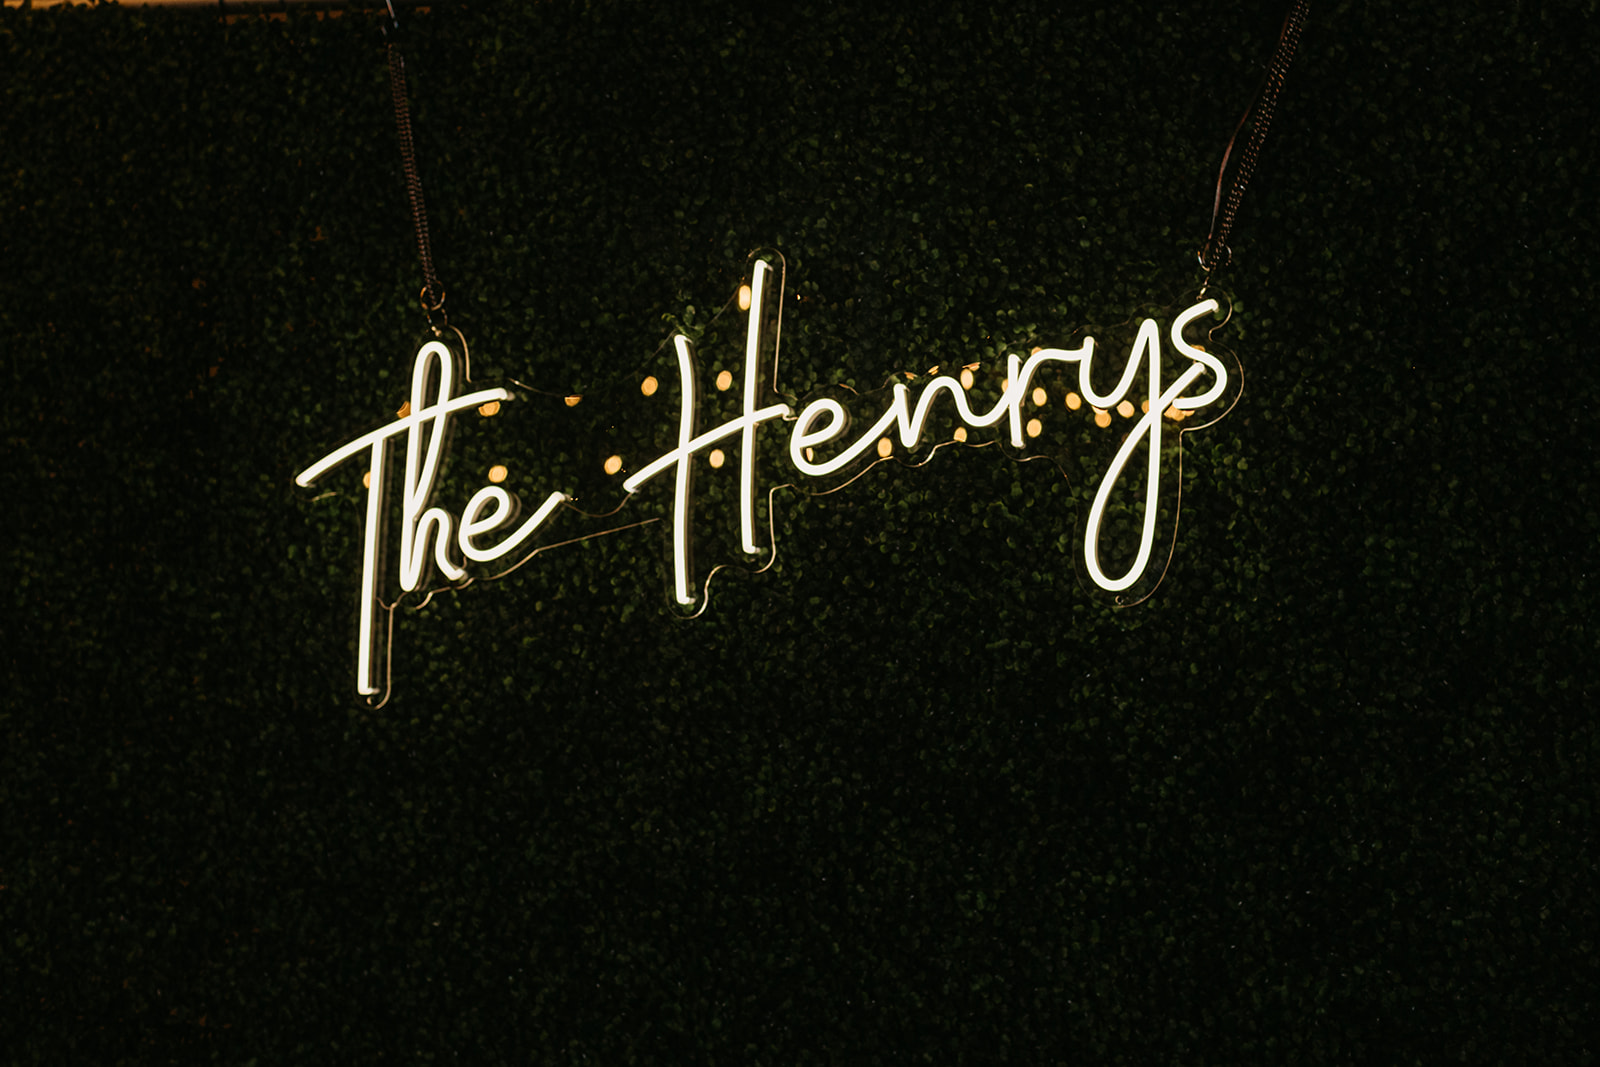 The Henry's last name neon sign wedding decor